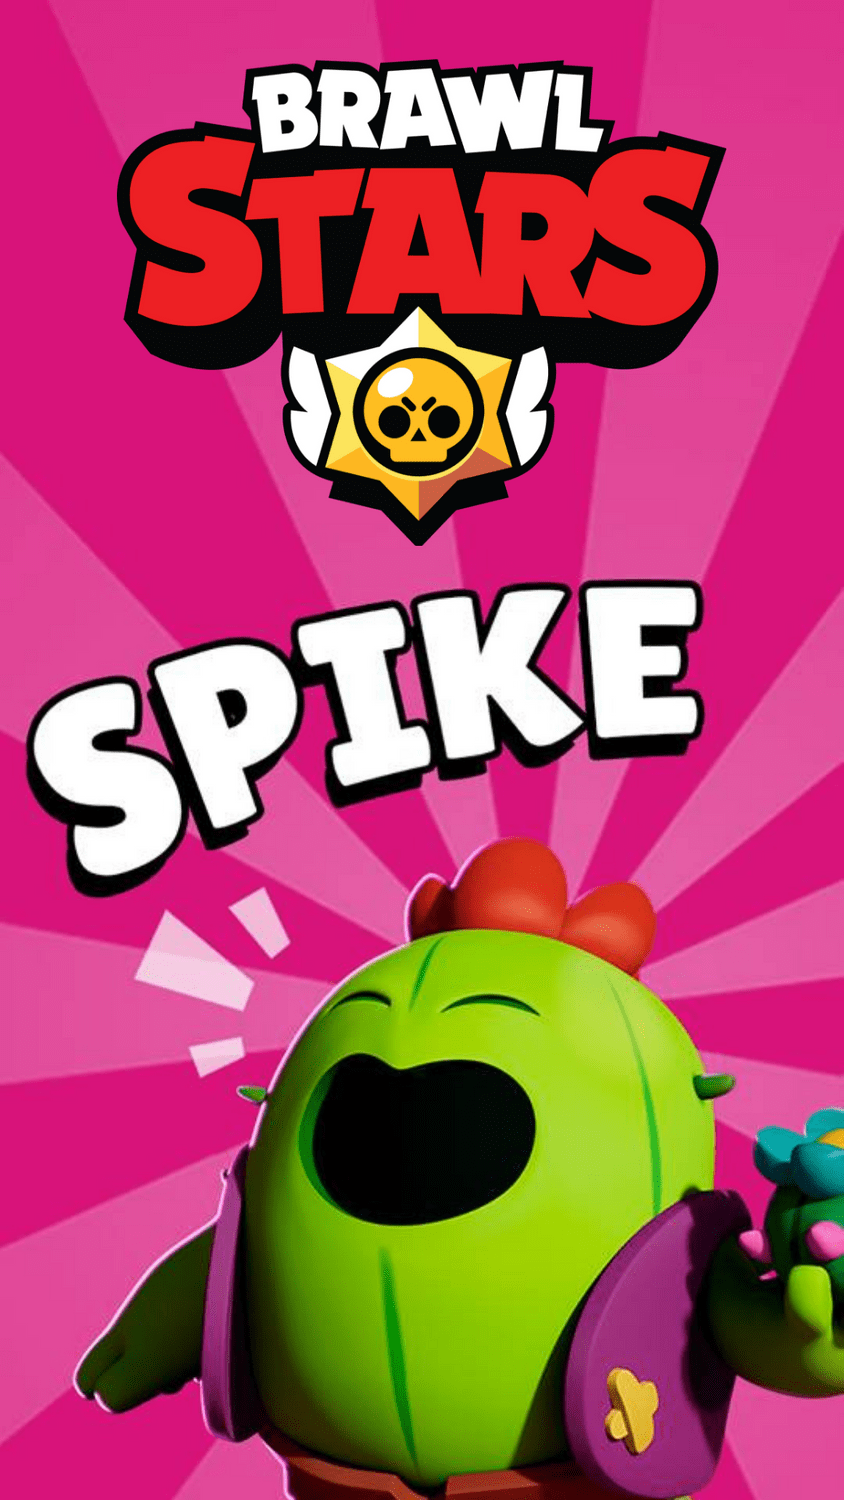 Spike Brawl Stars Wallpapers Top Free Spike Brawl Stars Backgrounds Wallpaperaccess - fondos de brawl stars spike